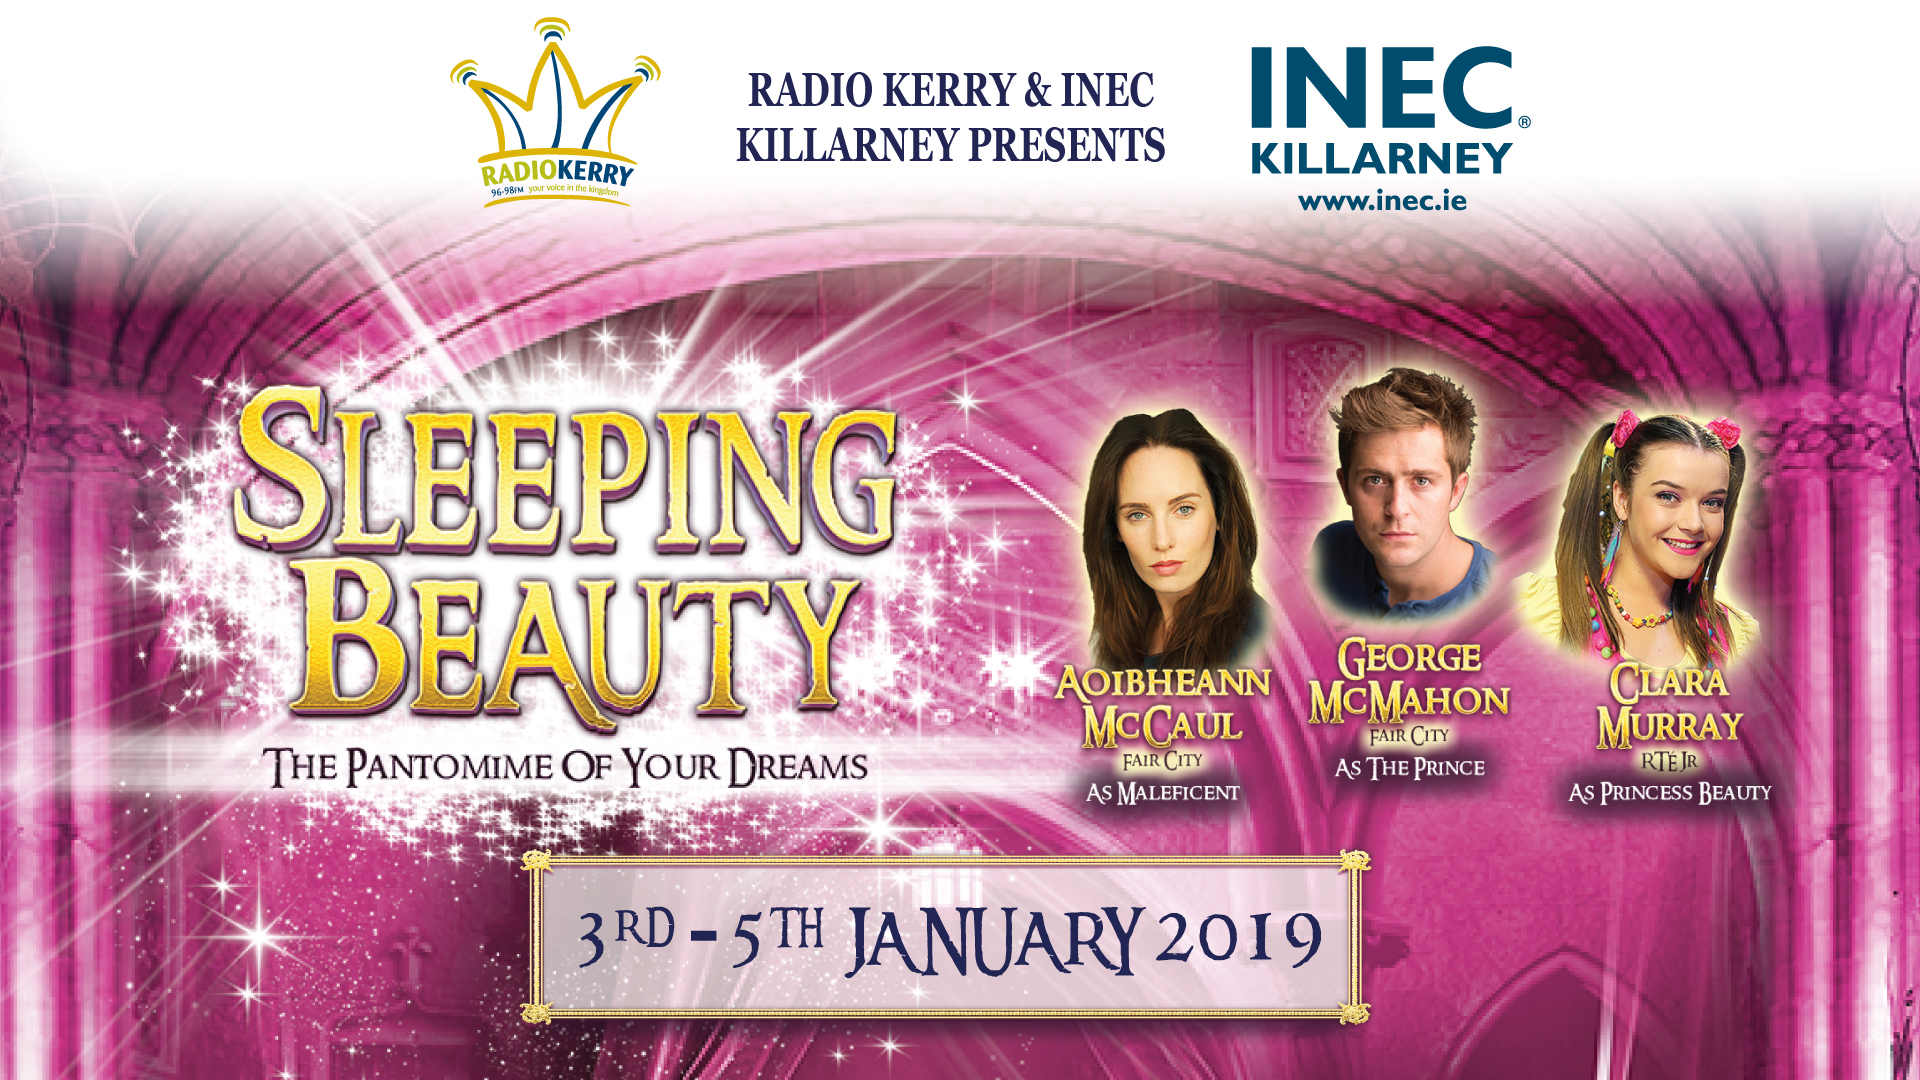 Sleeping Beauty Panto comes to the INEC Killarney on Jan 3-5 2019